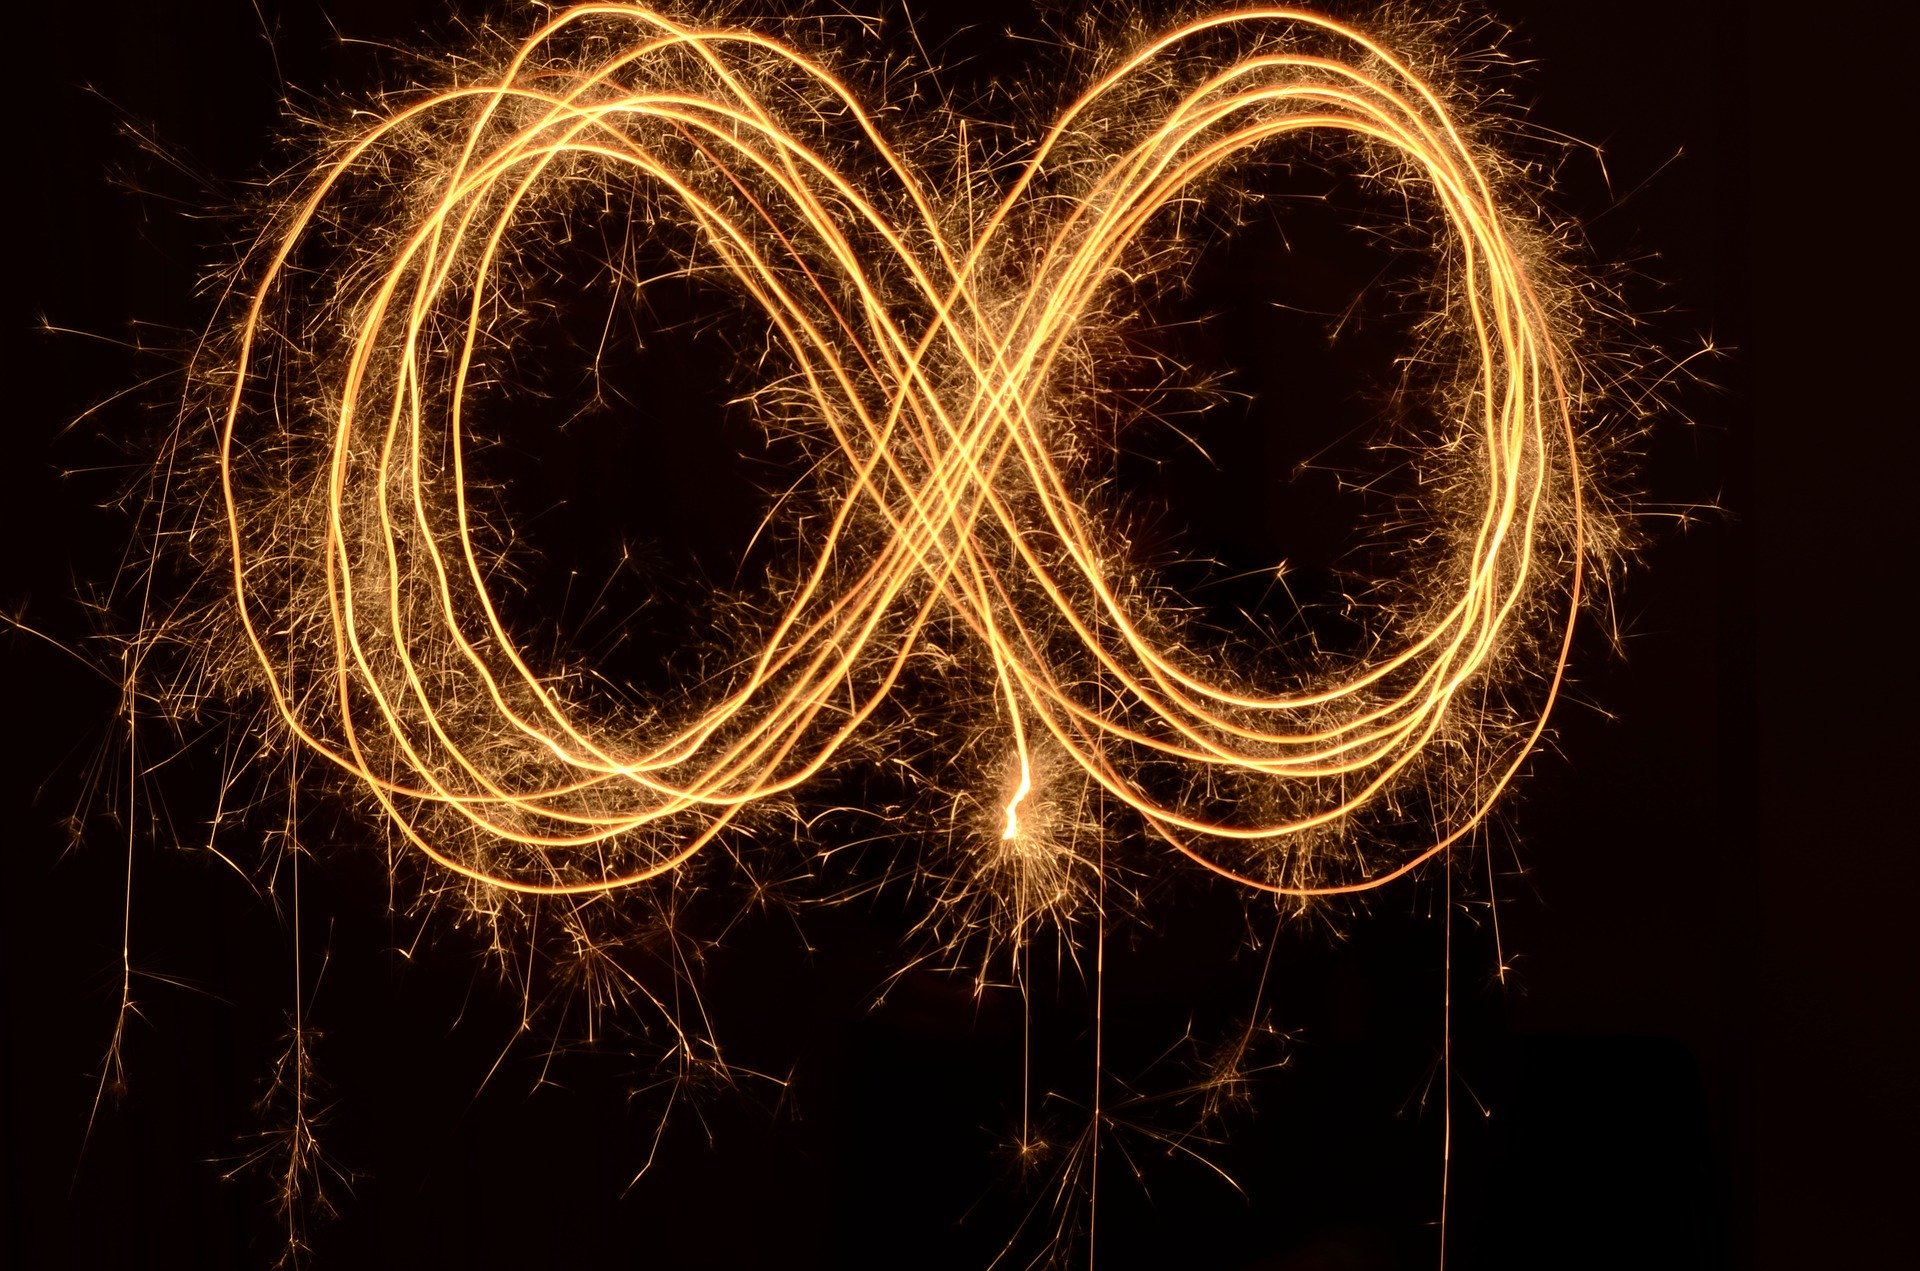 an infinity sympol drawn using sparklers/light